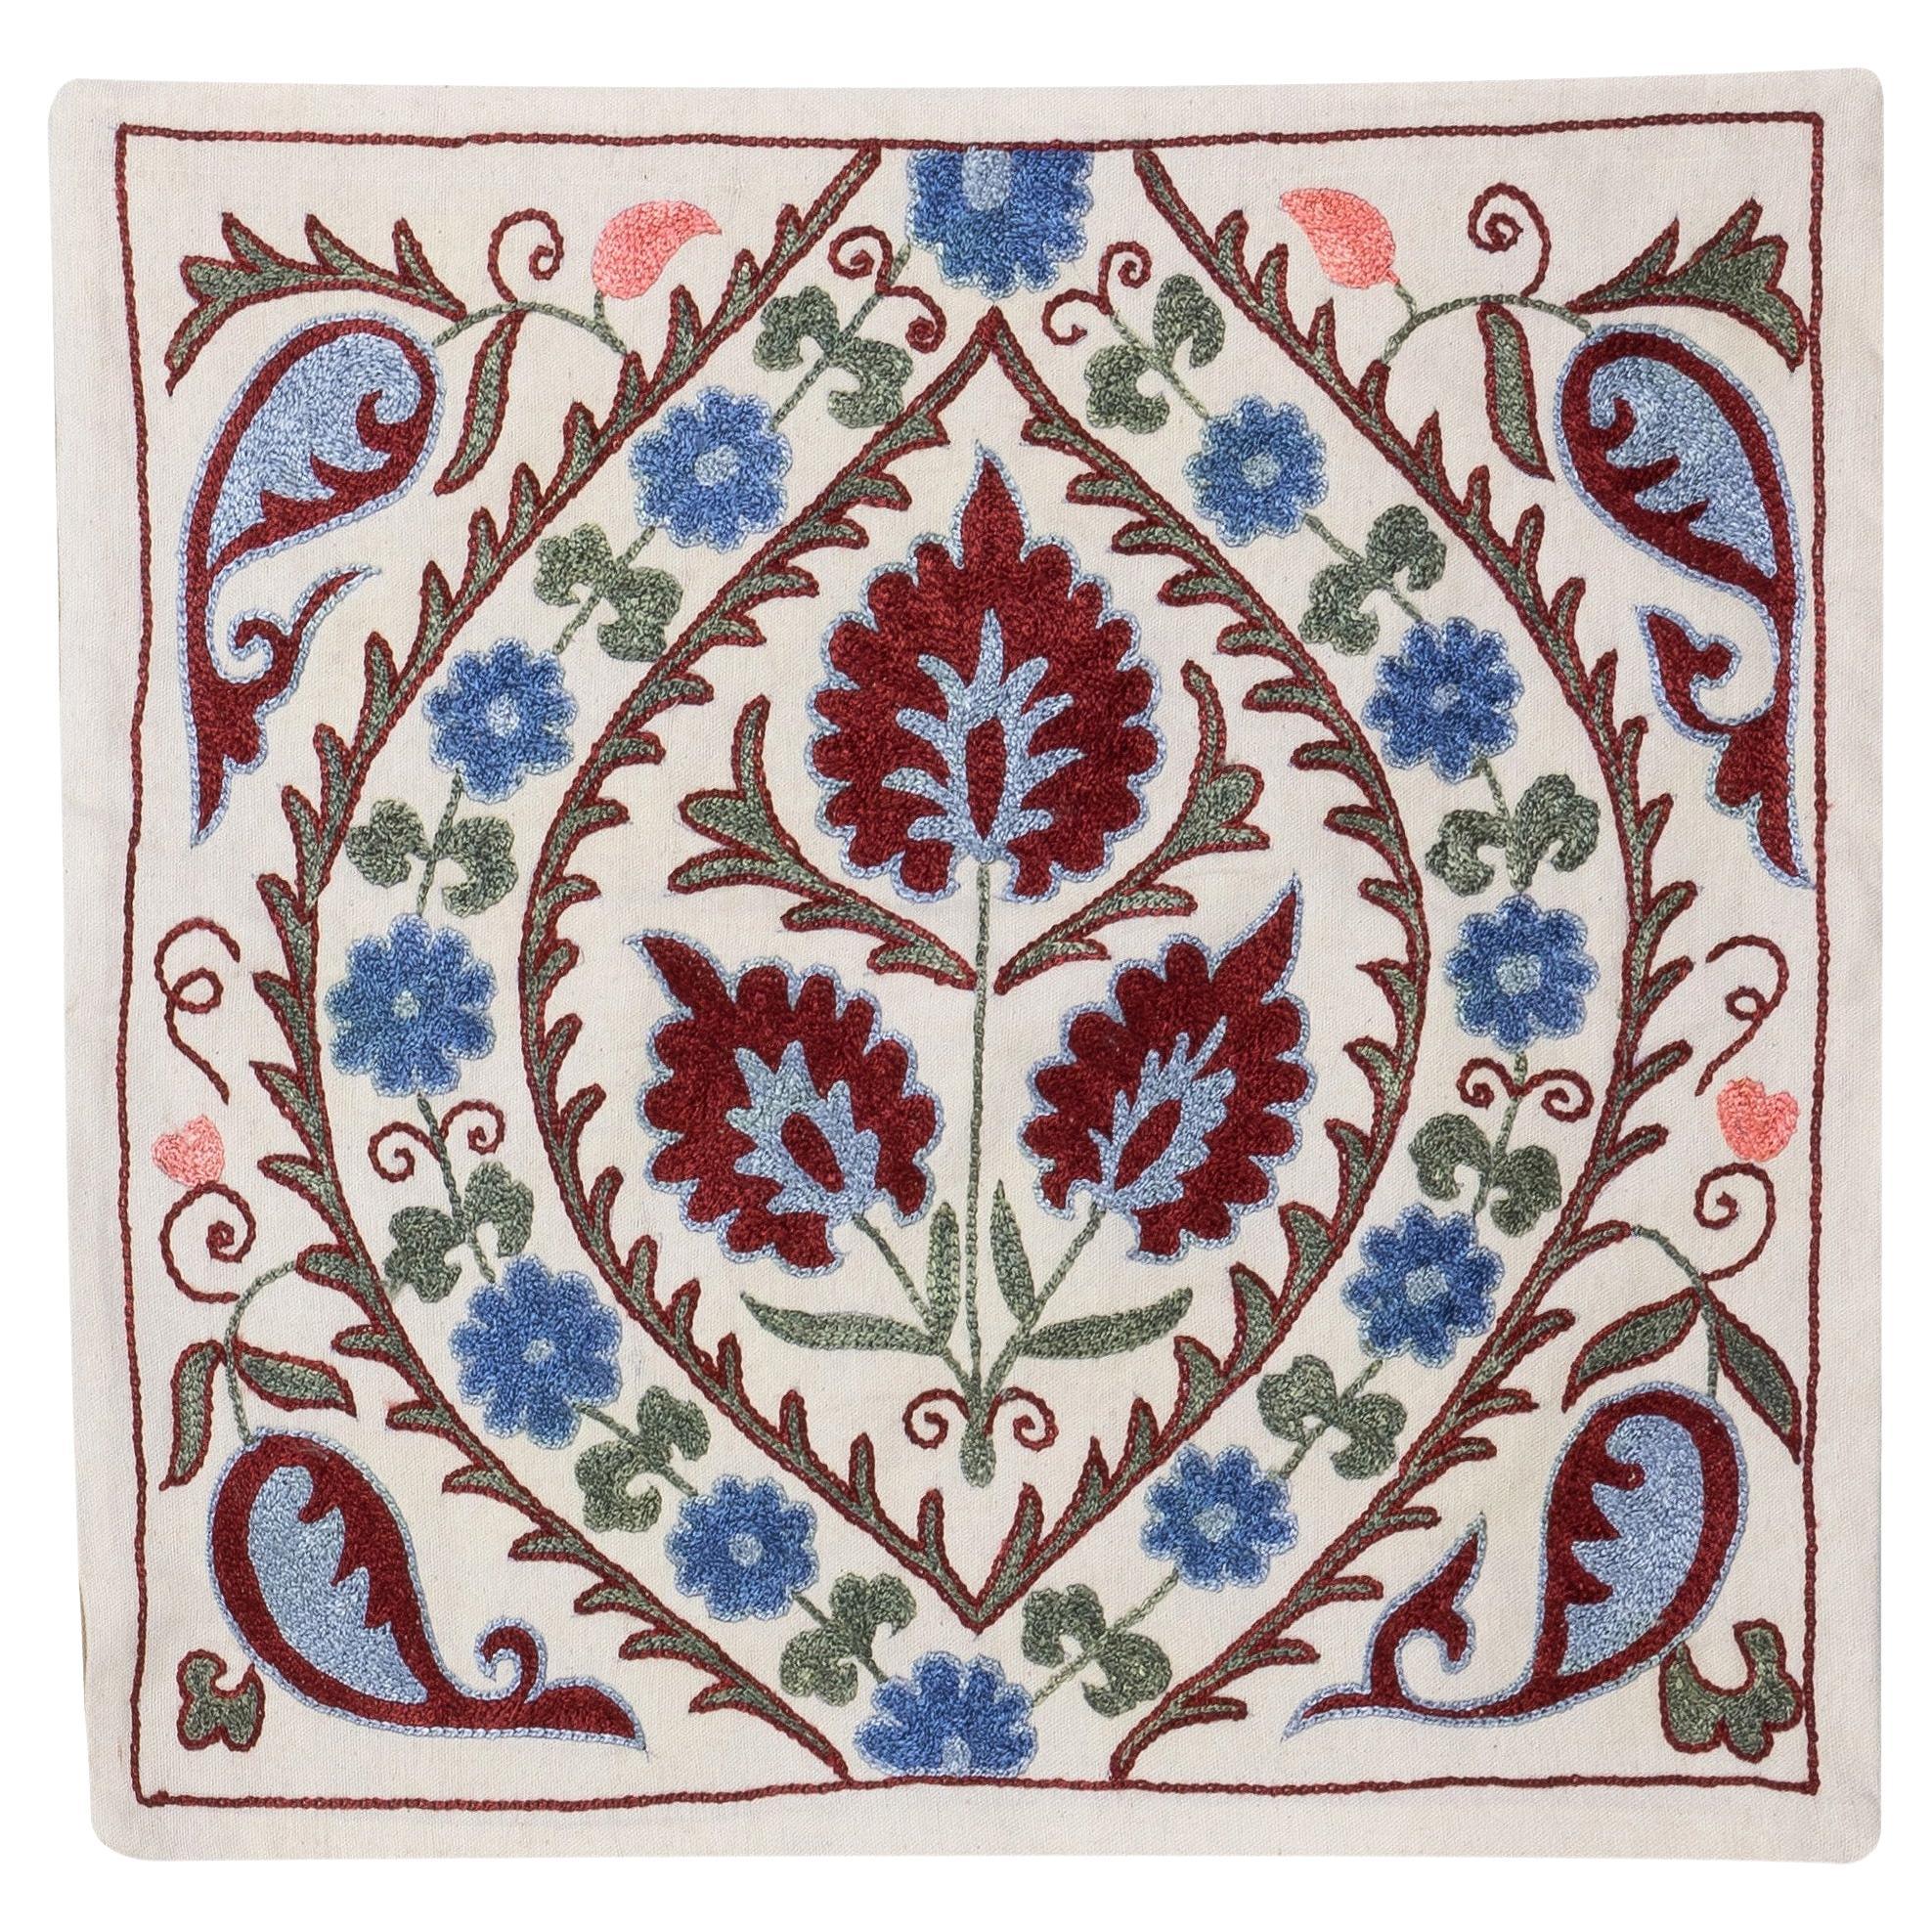 19"x19" Square Silk Embroidered Suzani Textile Cushion Cover from Uzbekistan